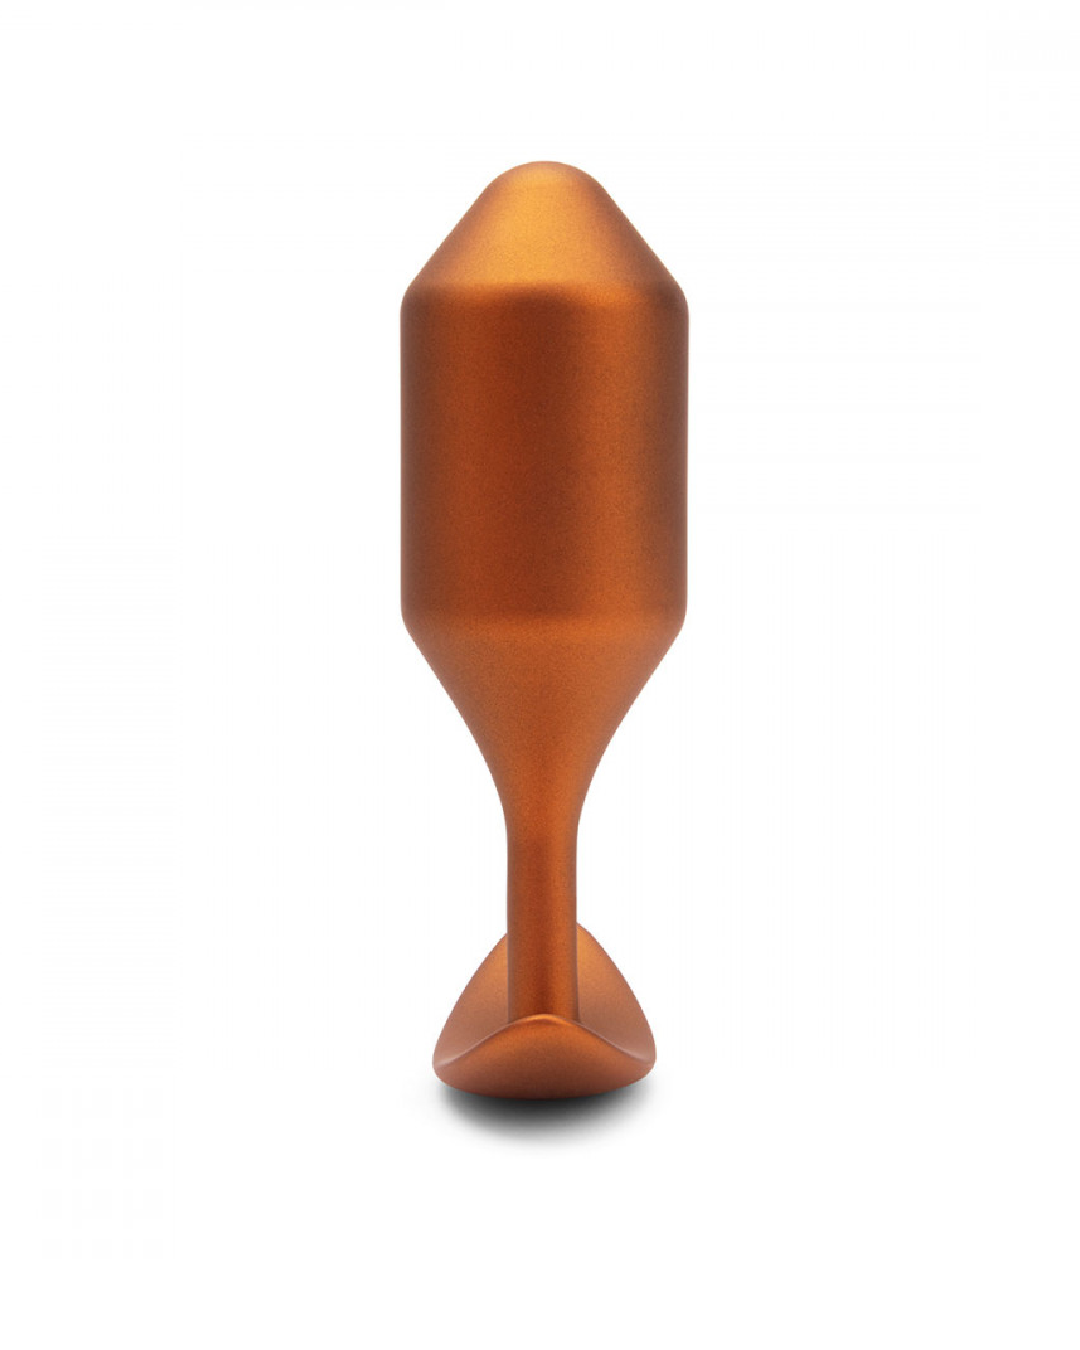 B-vibe Snug Plug 4 XL Weighted Silicone Butt Plug (257 grams) - Sunburst Orange side view